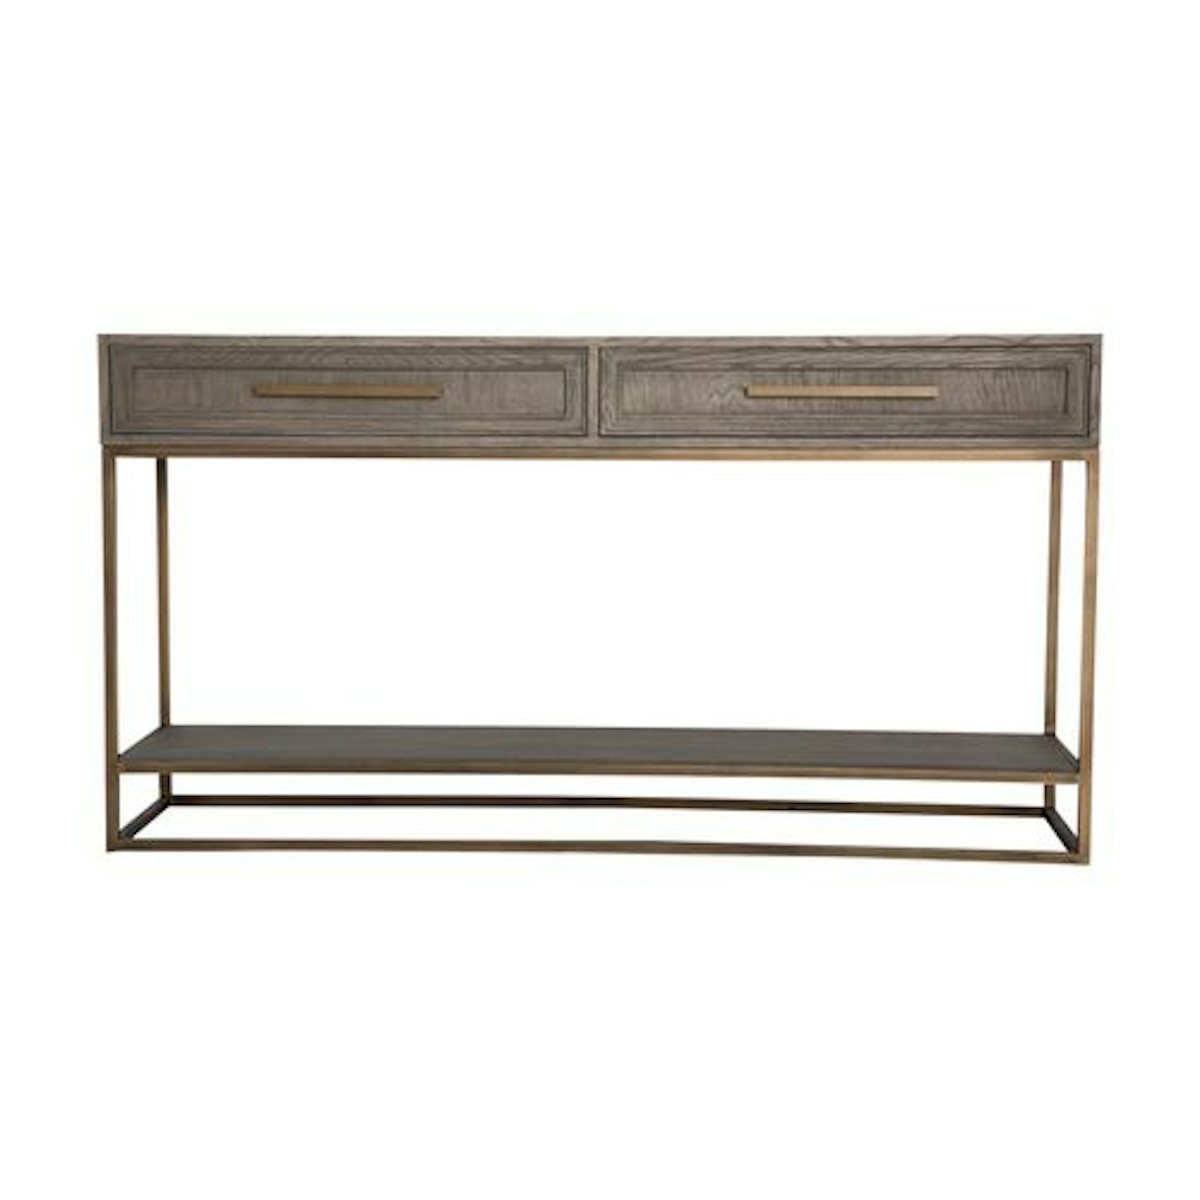 Wood-console-table-_-Shop-console-tables-online-at-LuxDeco.com